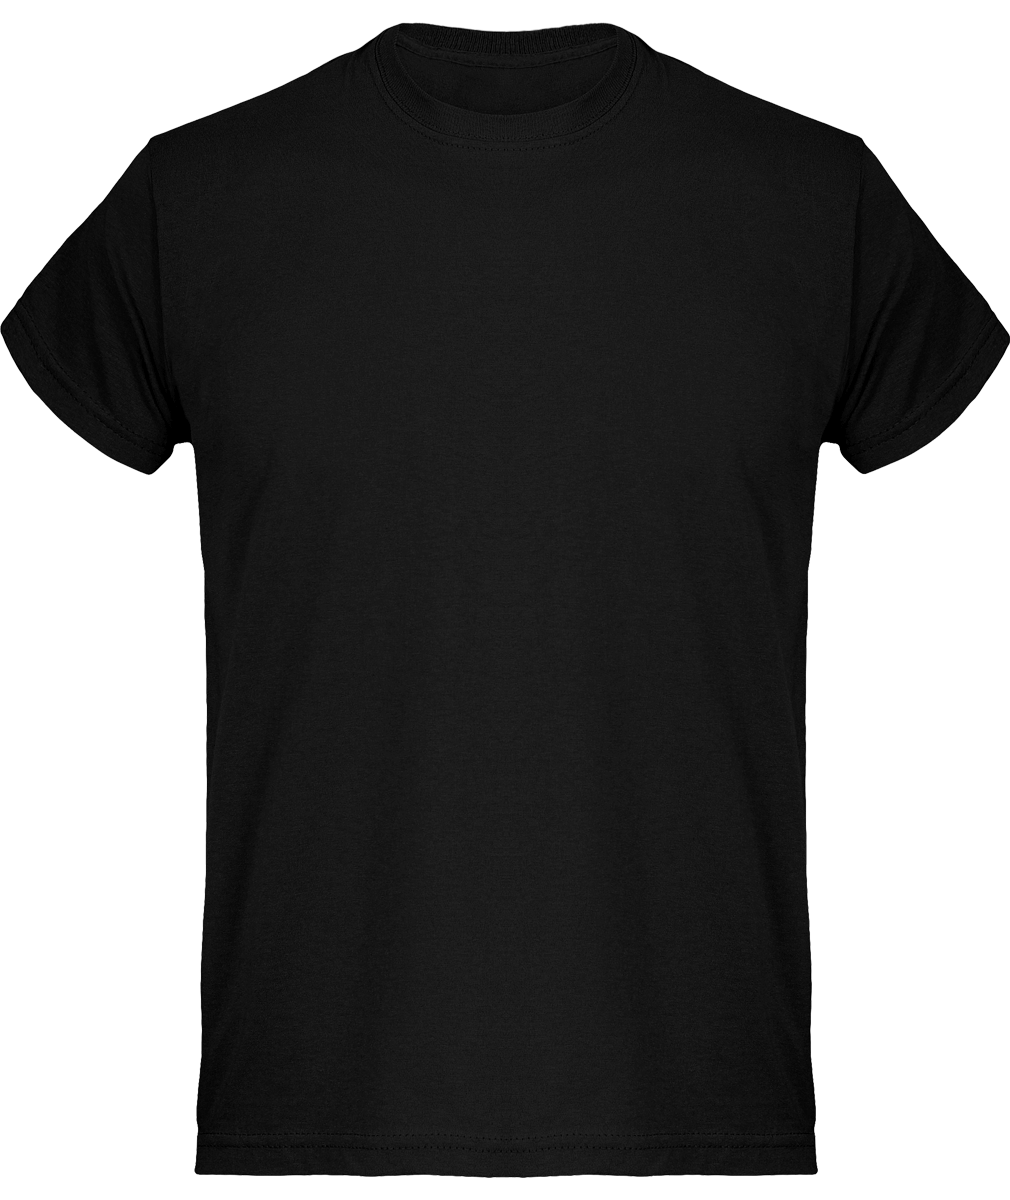 Basic Cotton T-Shirt For Men Ideal For Customization Black